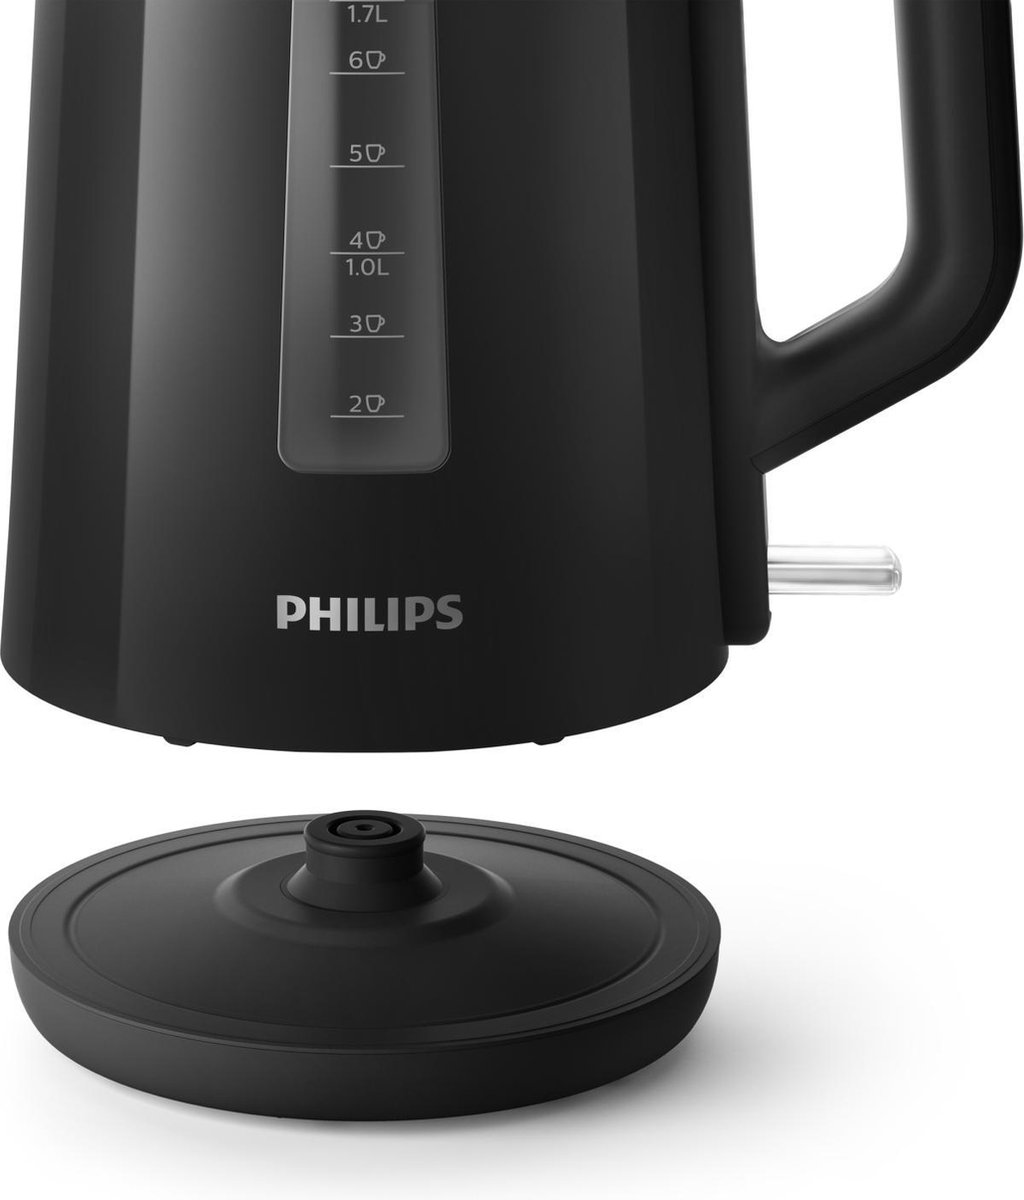 Philips Series 3000 HD9318/20 - Waterkoker - Zwart | bol.com